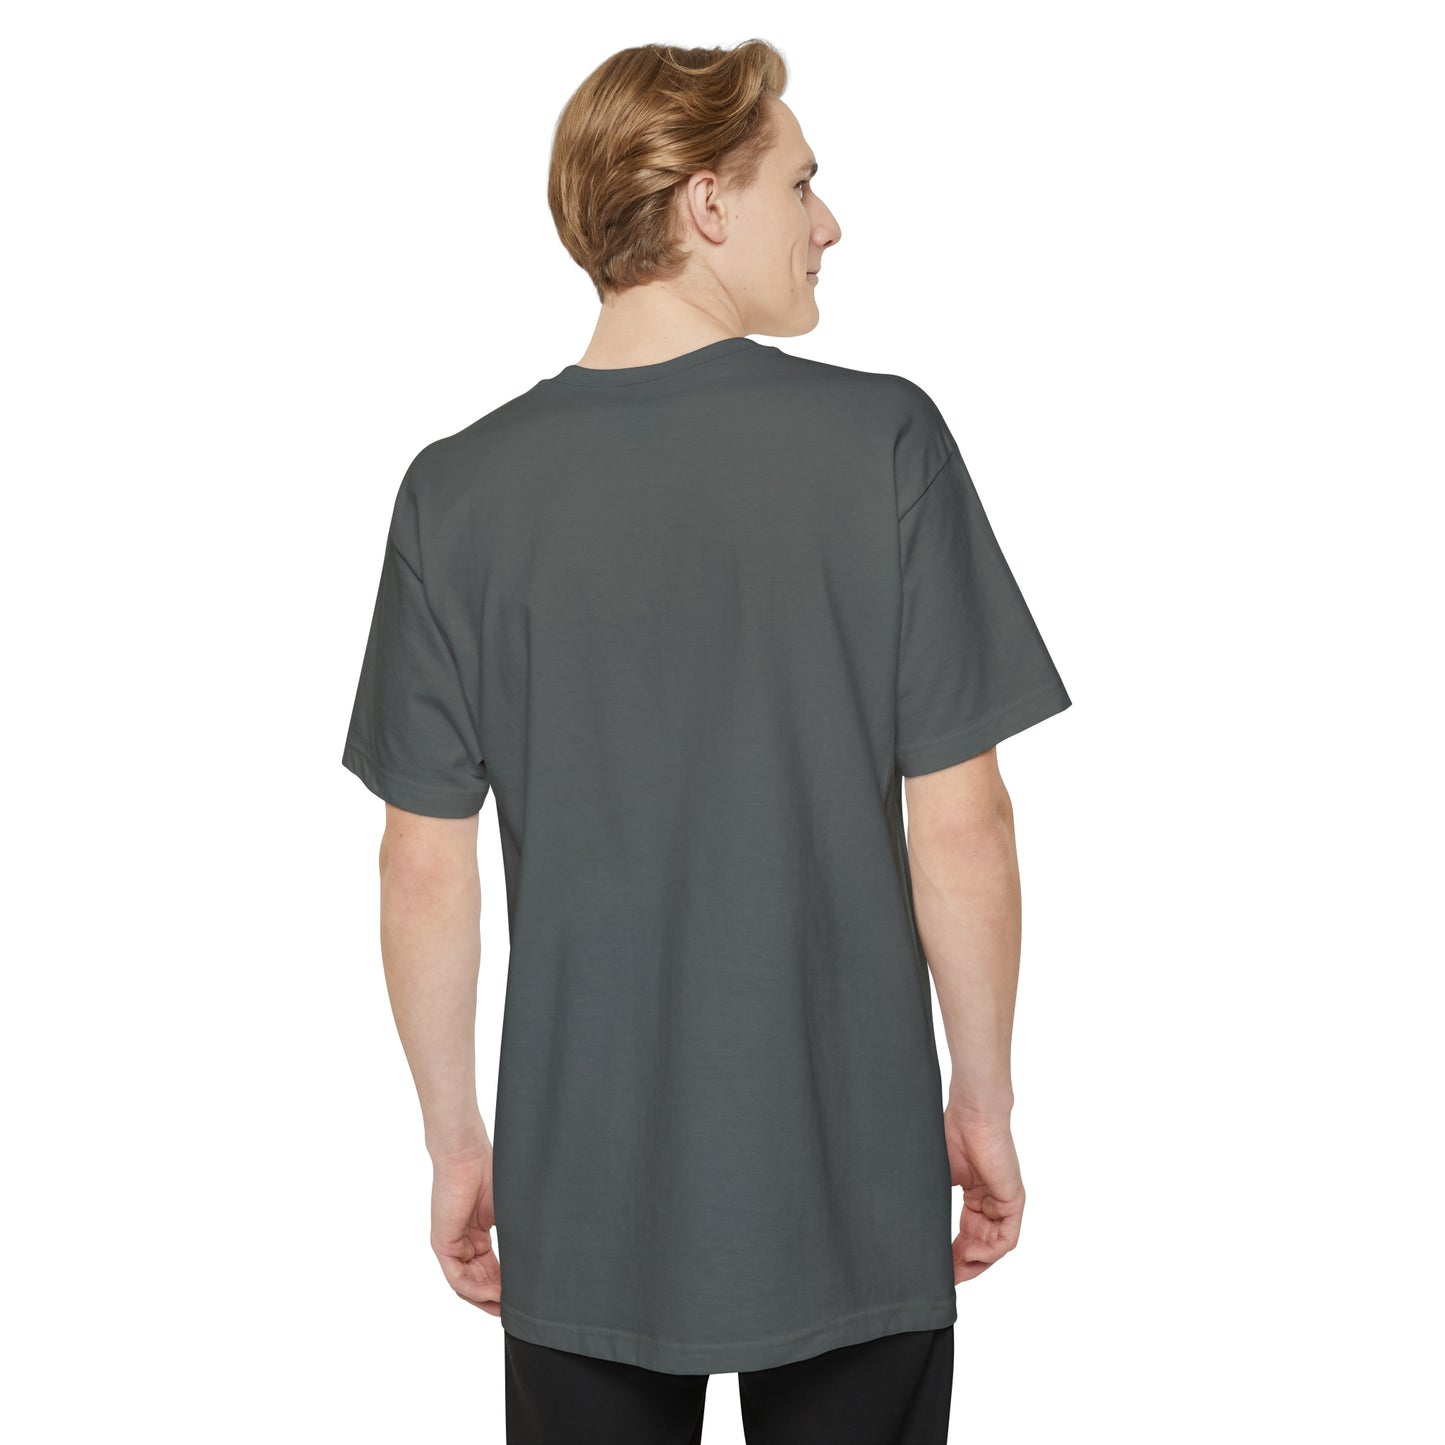 04b. Tall Size T-Shirt - Guppy Design